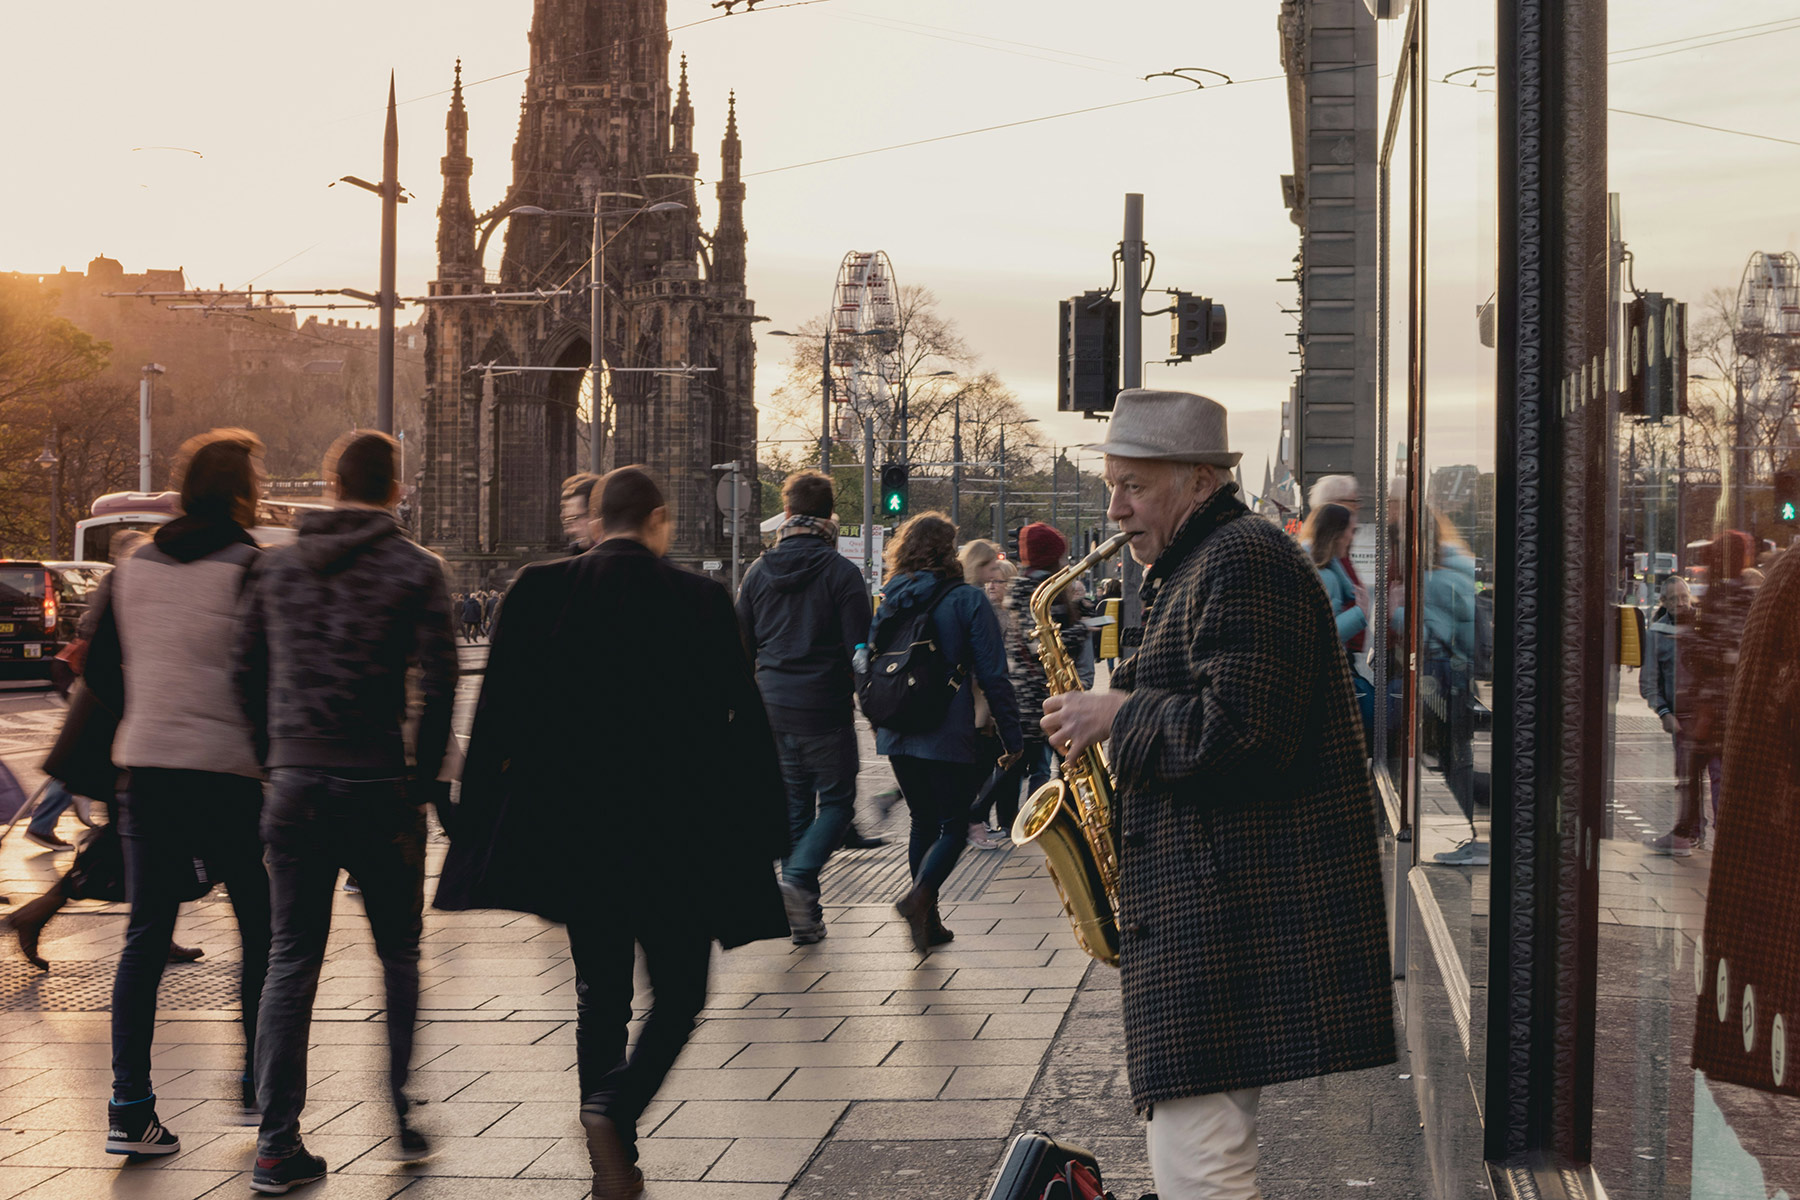 A street musician playing saxophone in Edinburgh